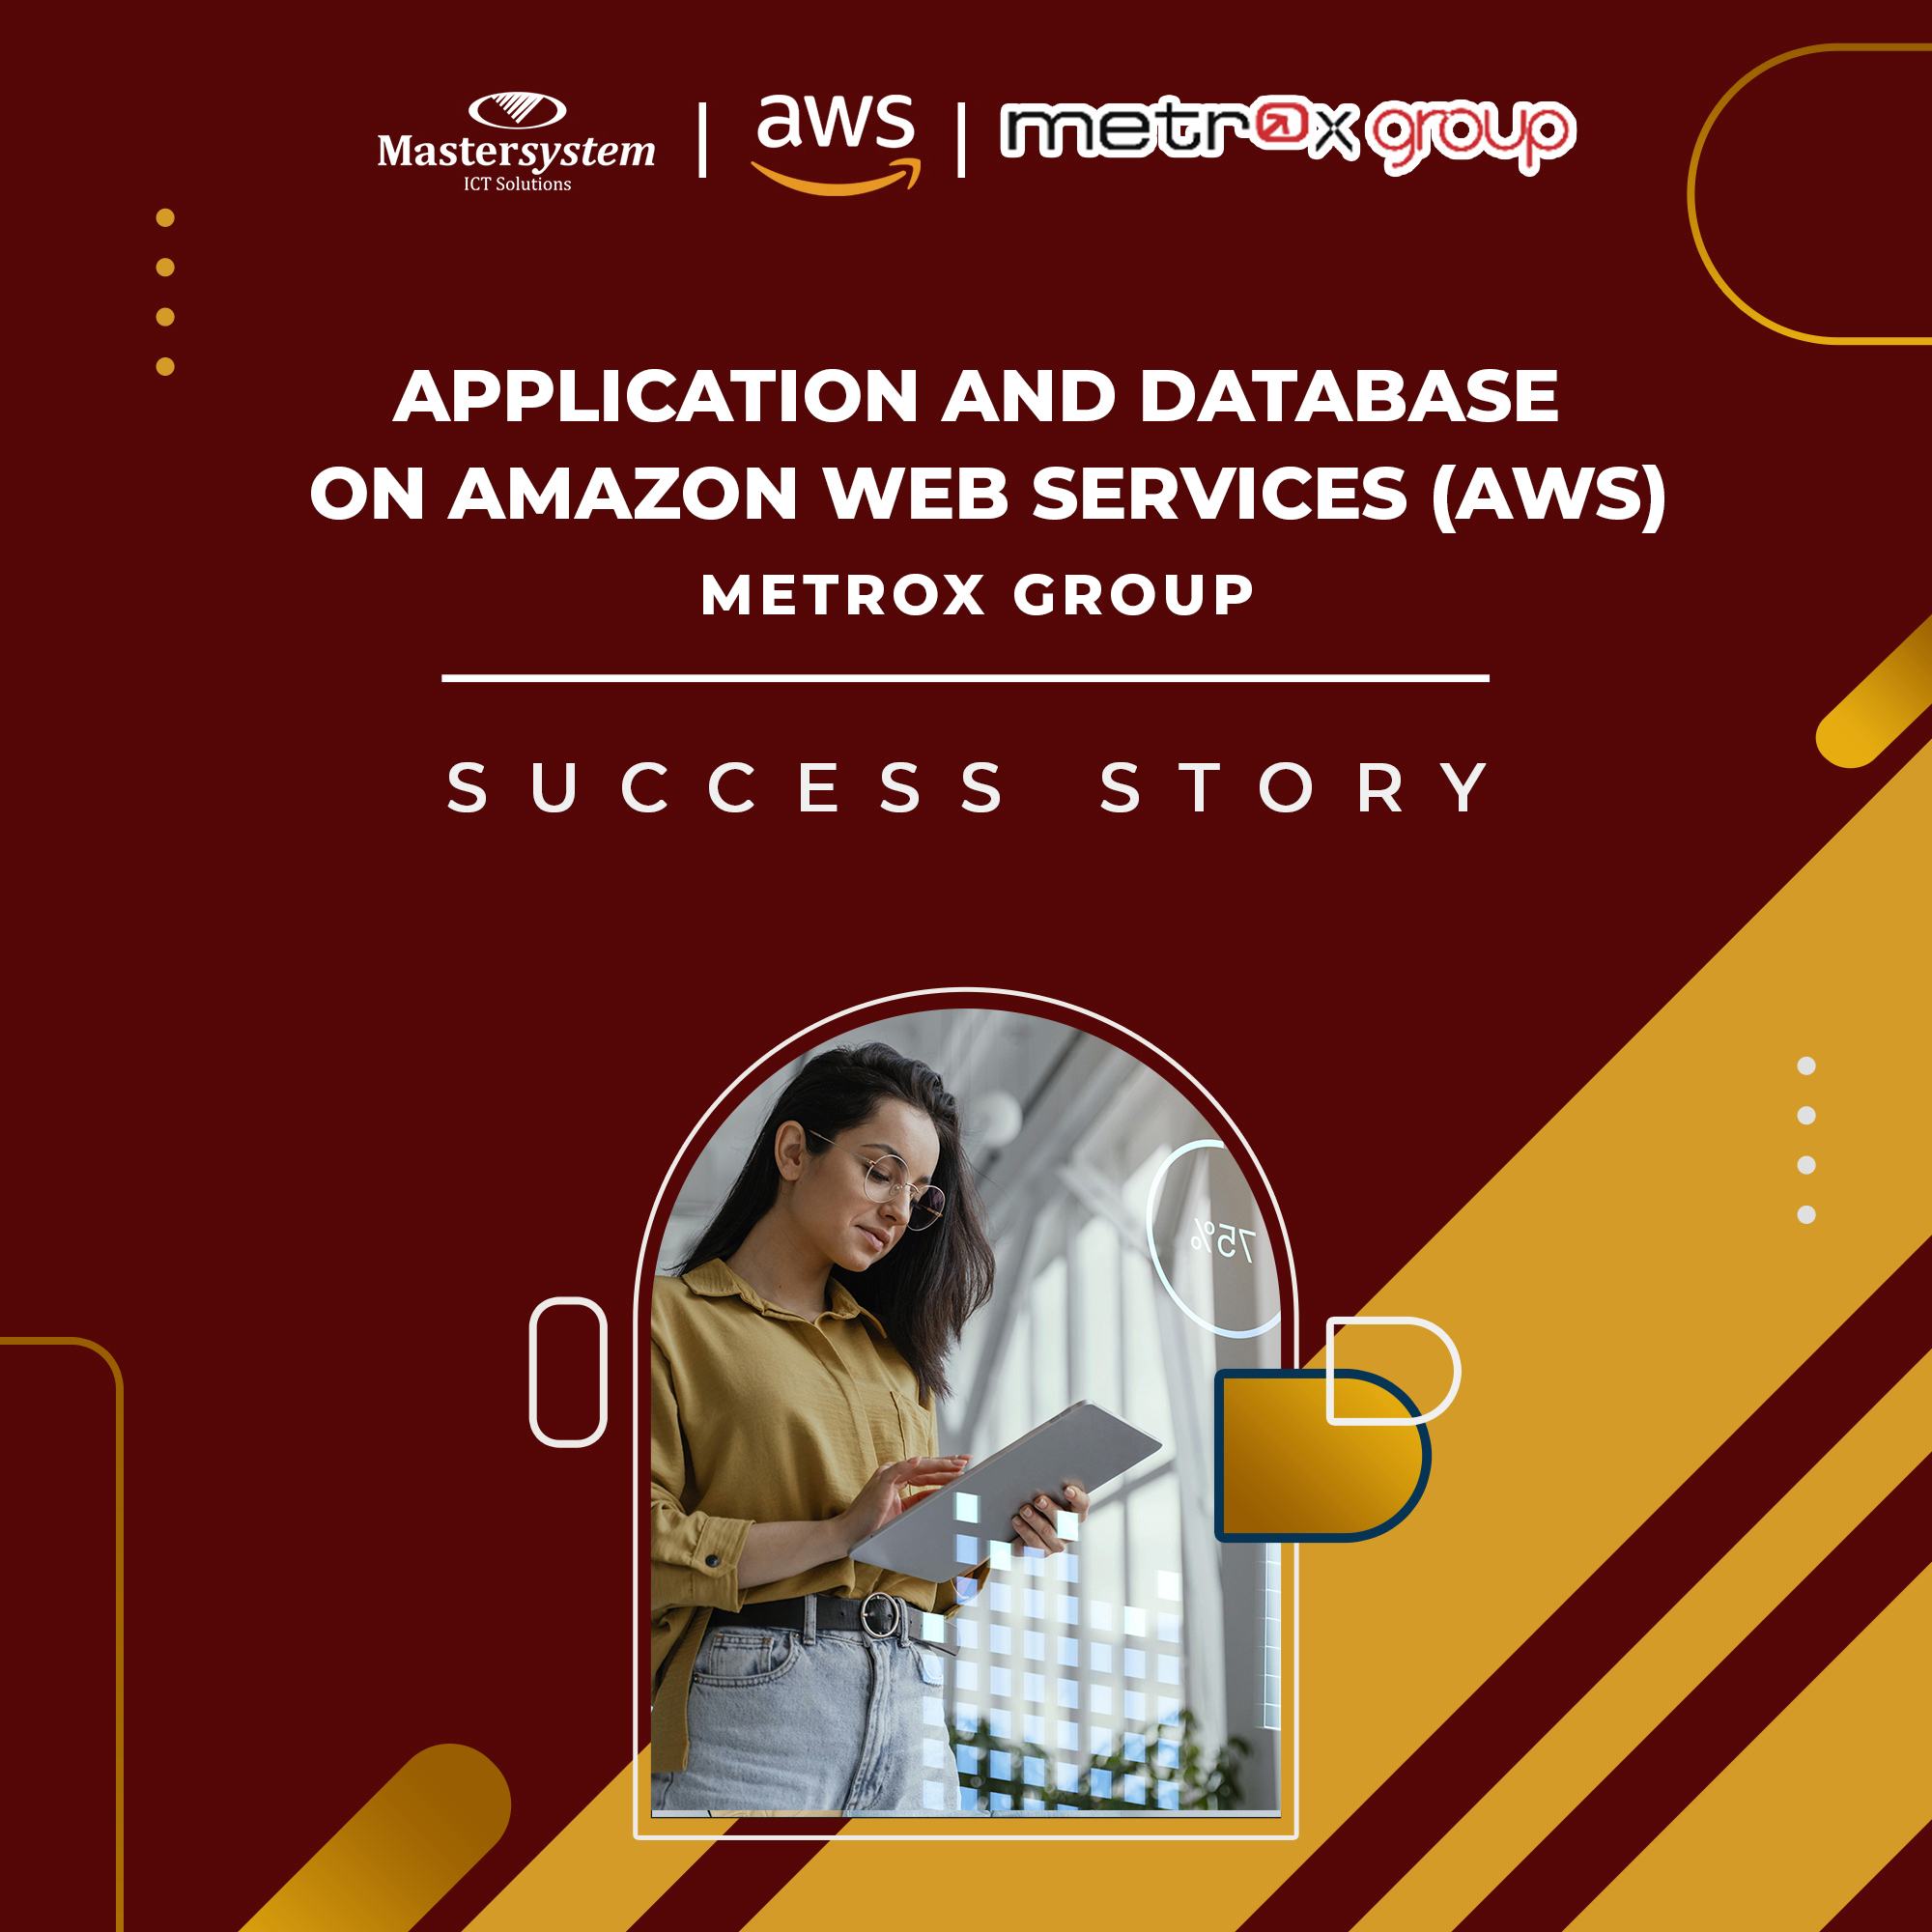 Keberhasilan Implementasi Application dan Database on Amazon Web Services (AWS) di Metrox Group